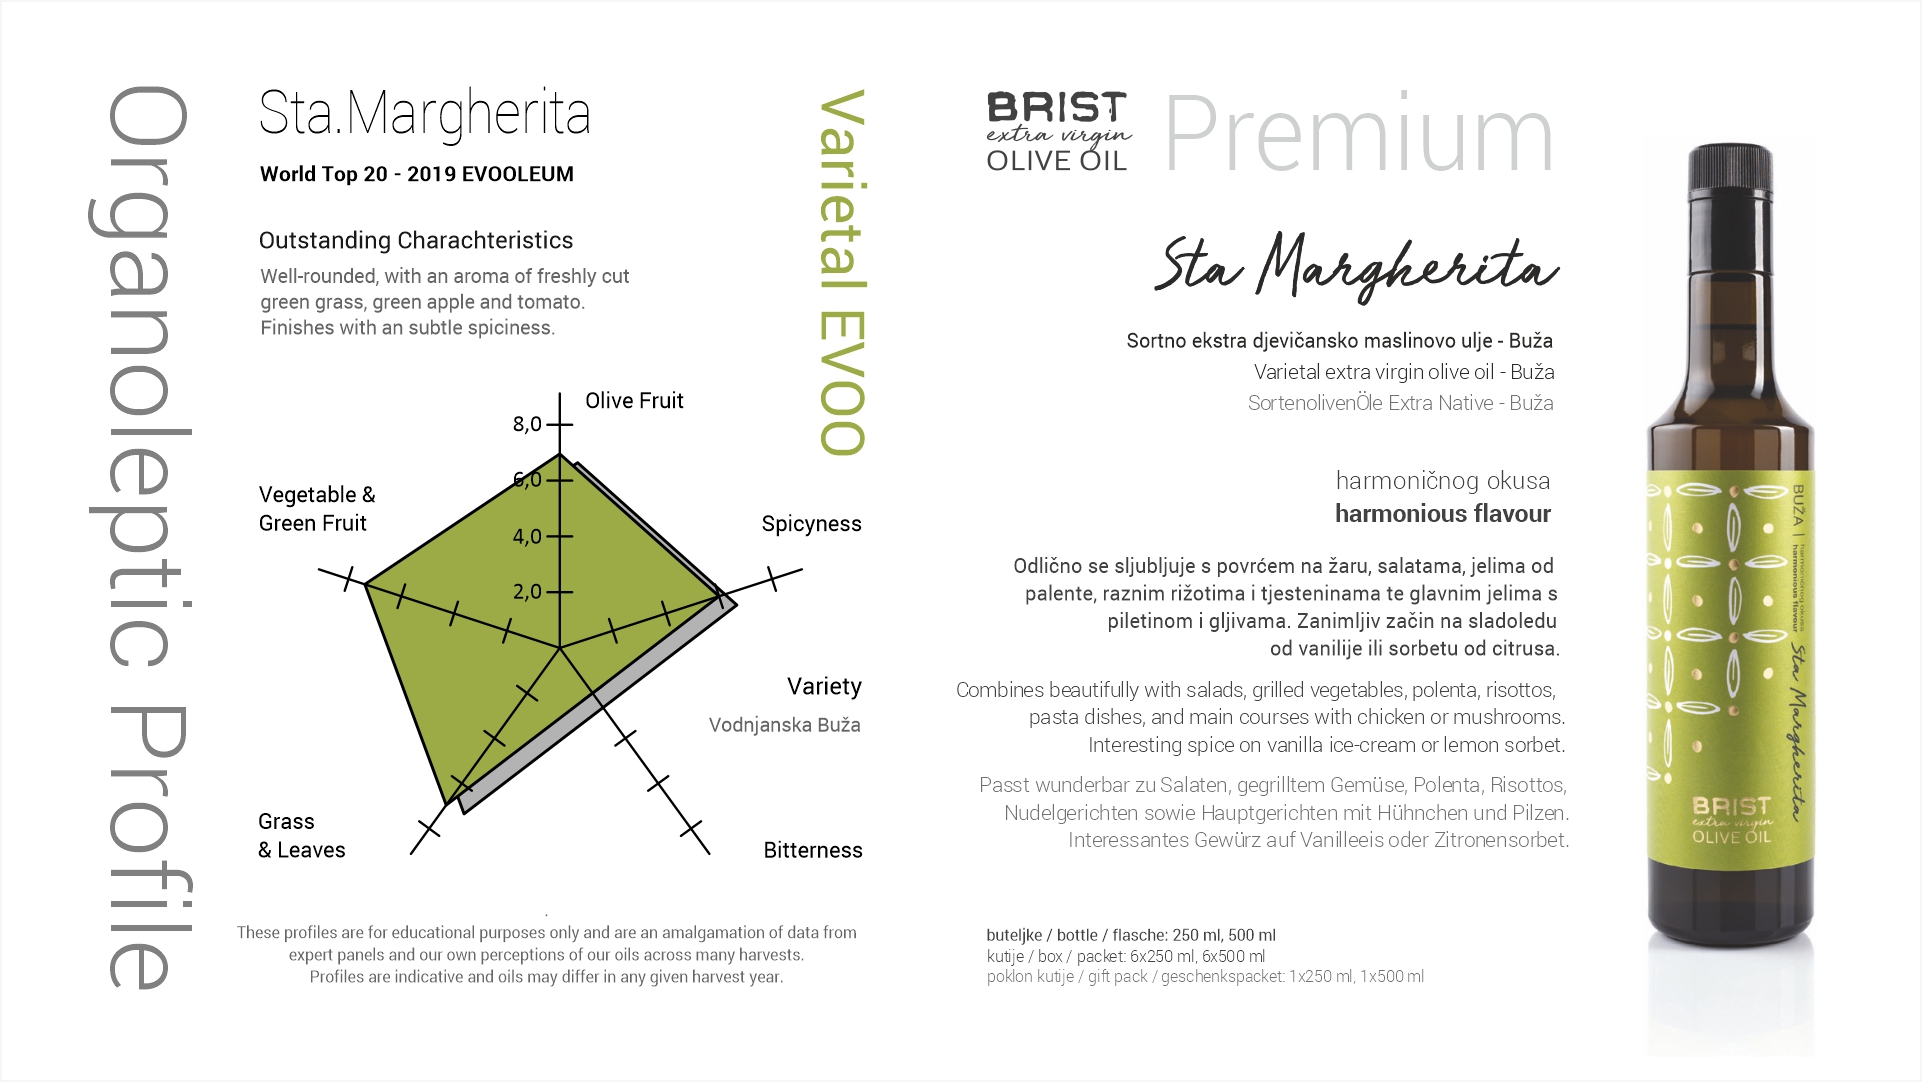 Brochure and Orgaanoleptics - 02 Sta Margherita